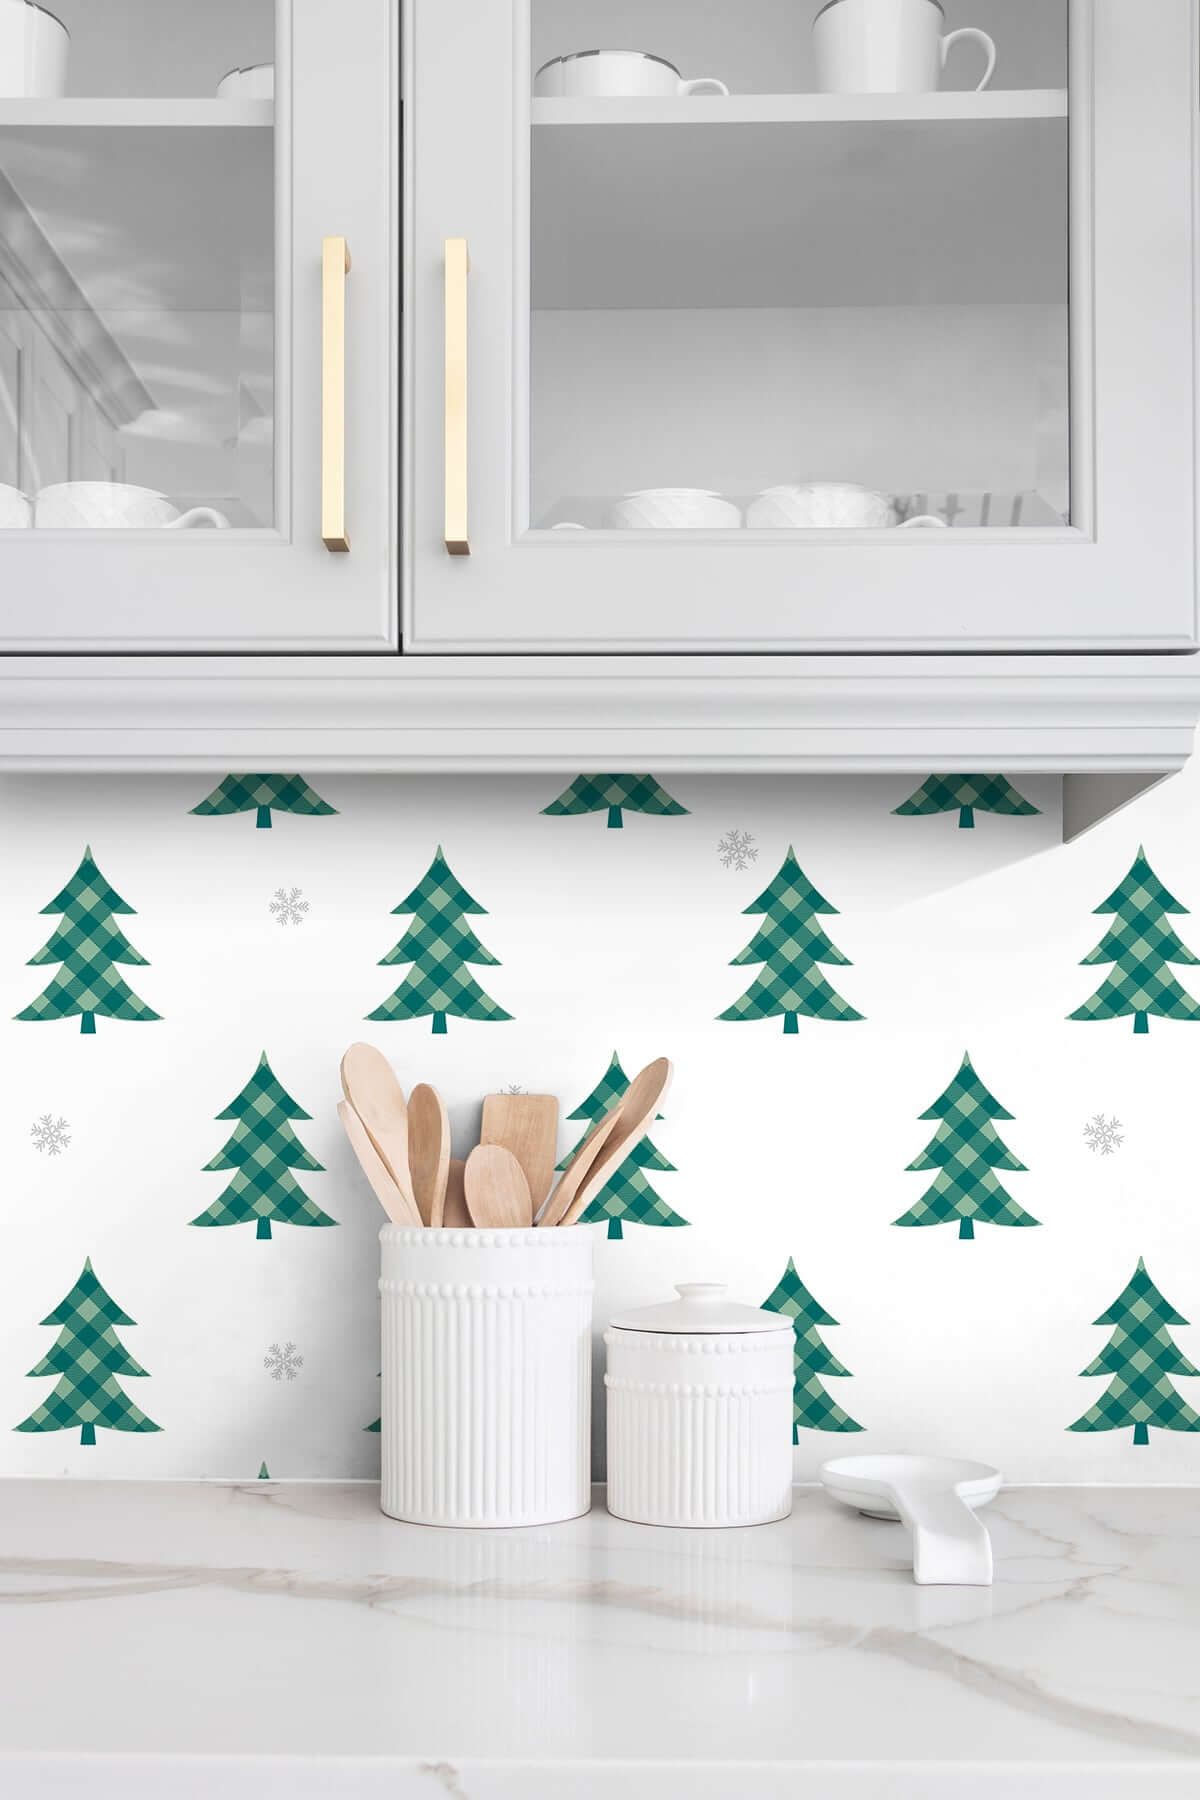 NextWall Plaid Pines Holiday Peel & Stick Wallpaper - Green & Silver